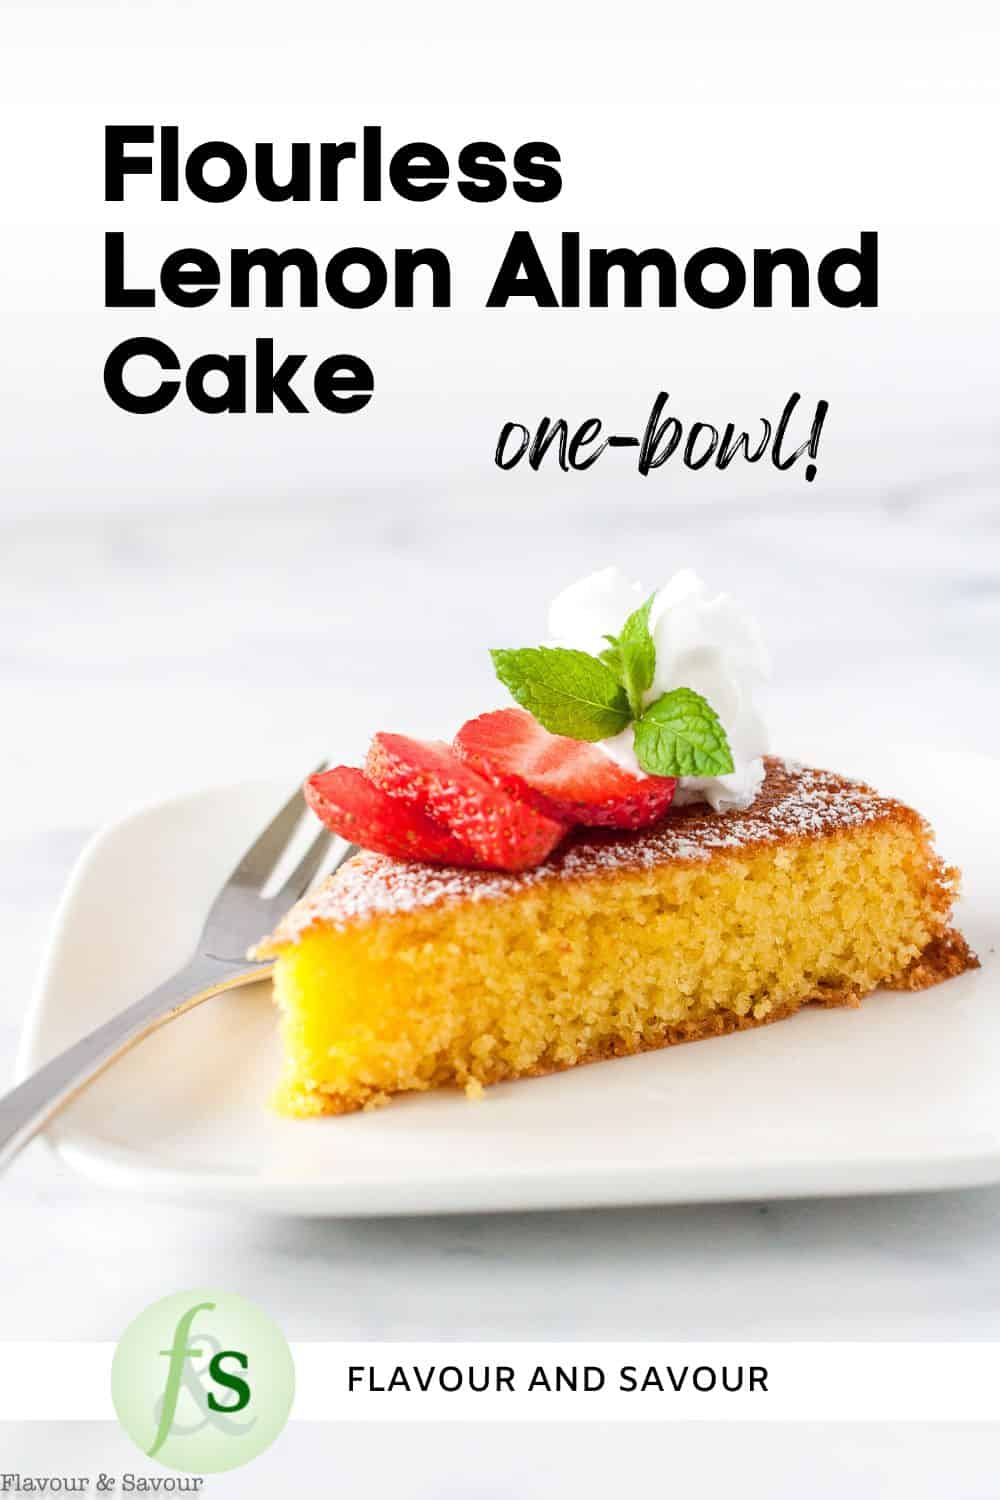 Image with text overlay for Flourless Lemon Almond Cake.